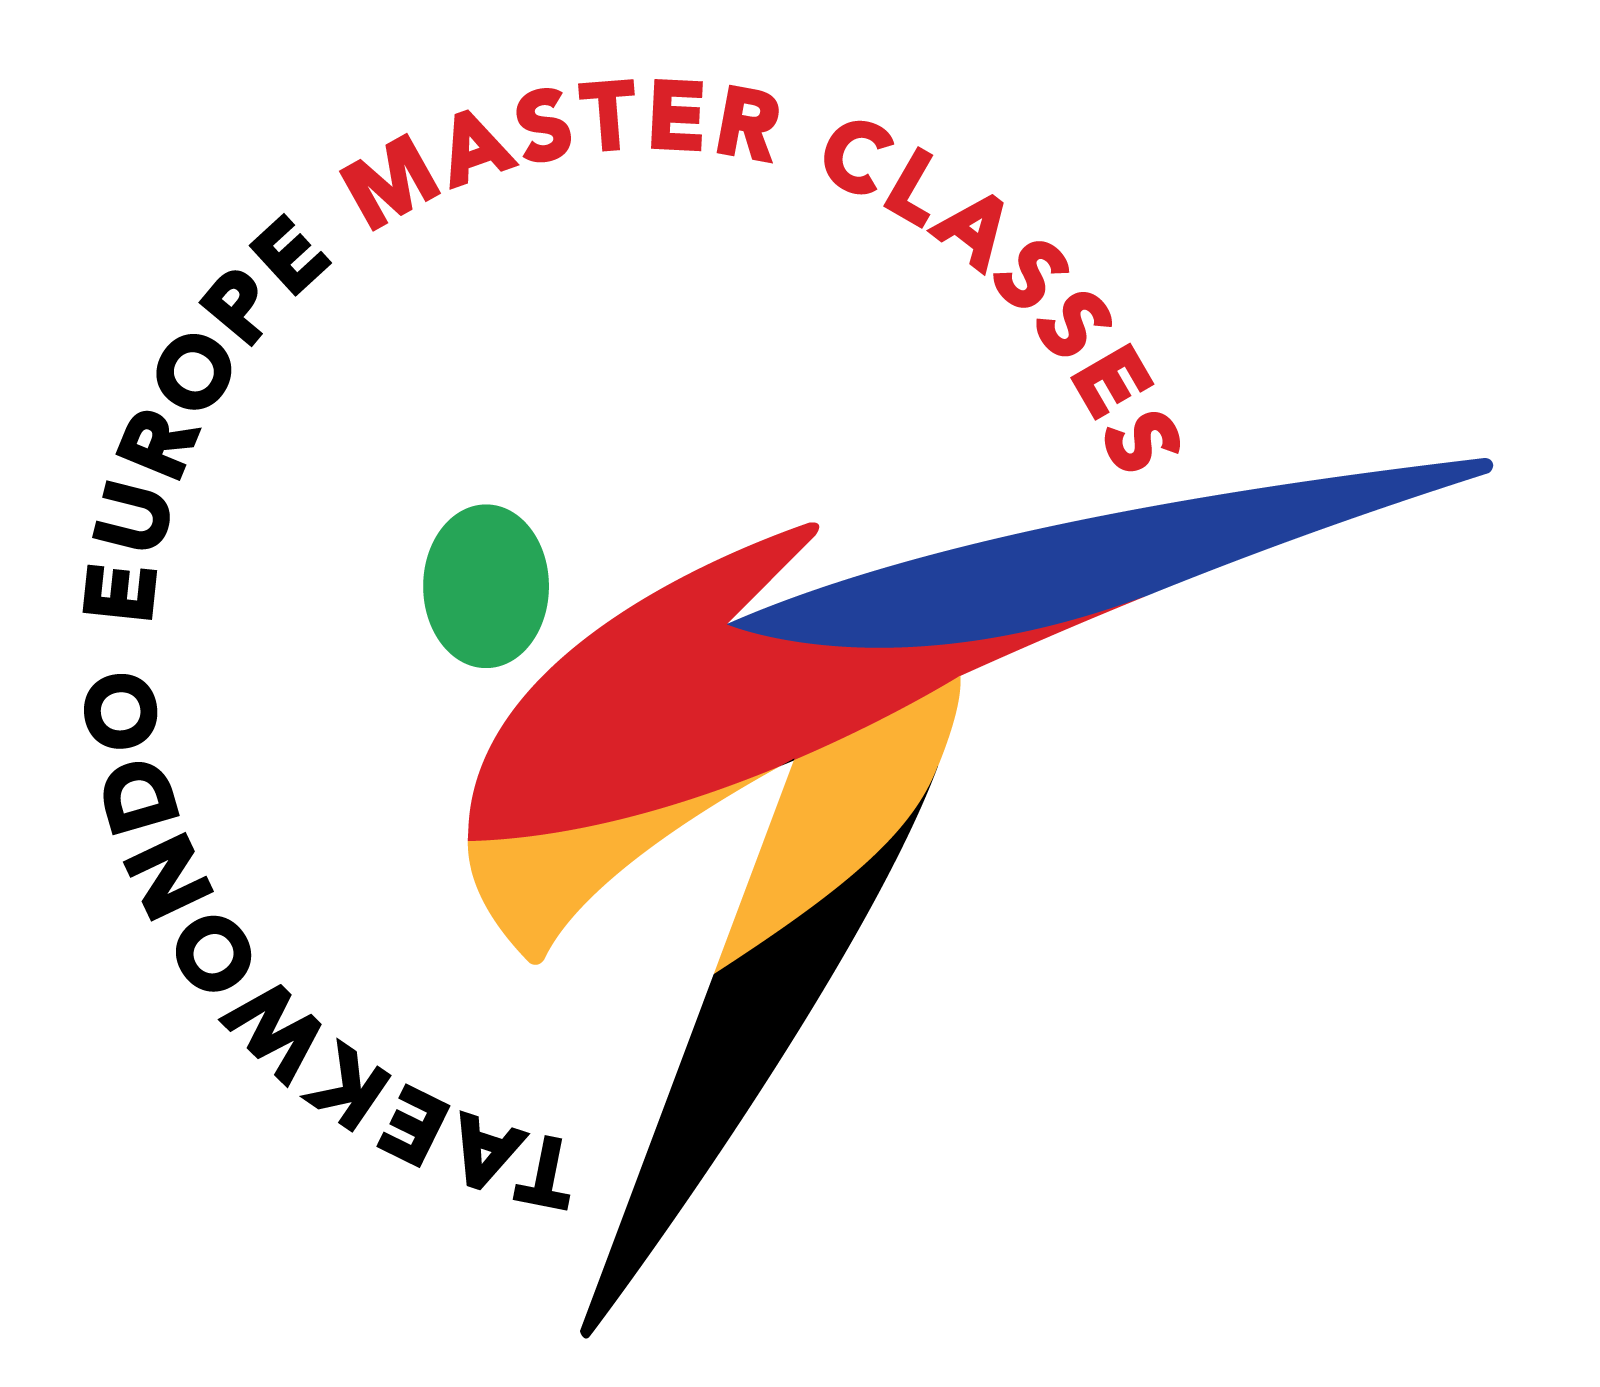 World Taekwondo Europe have announced details of their master class educational series ©World Taekwondo